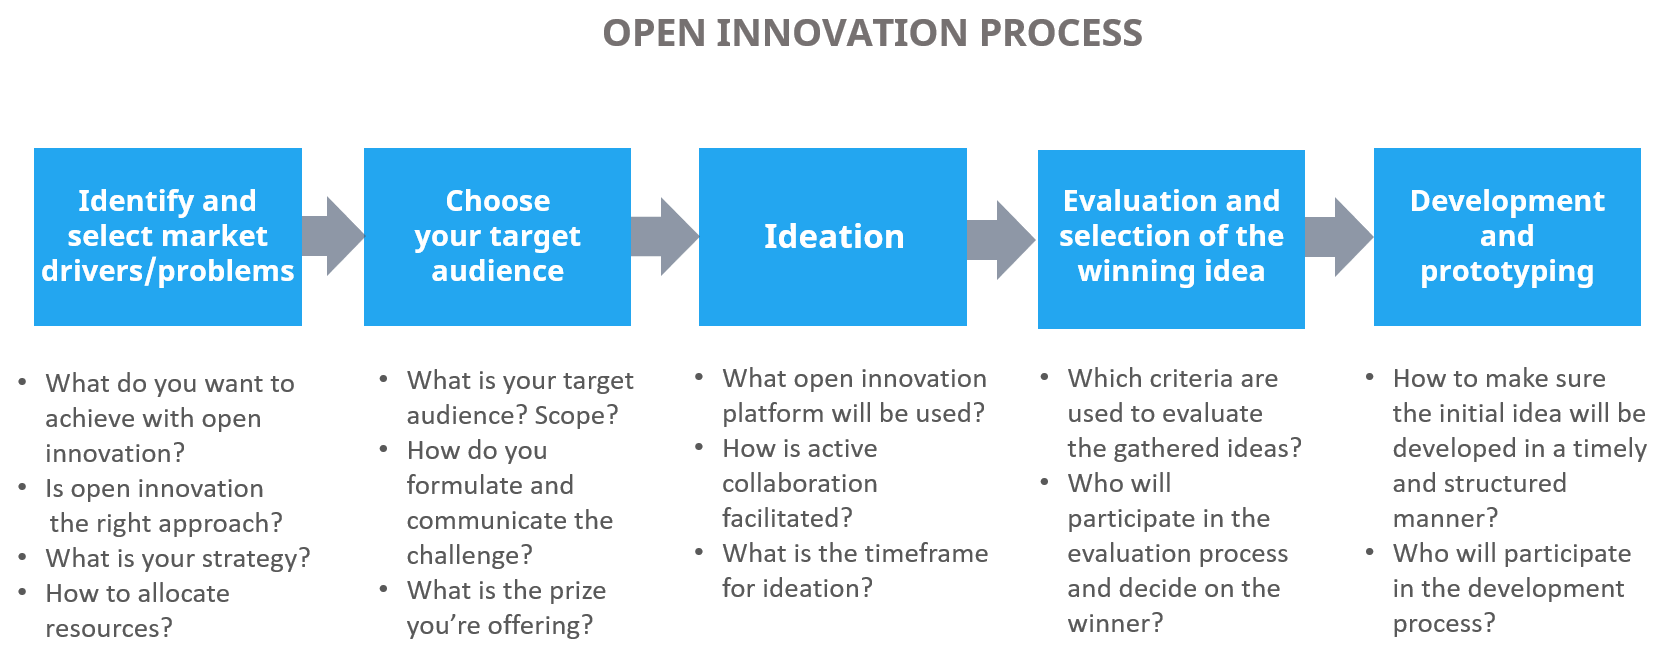 Open innovation process